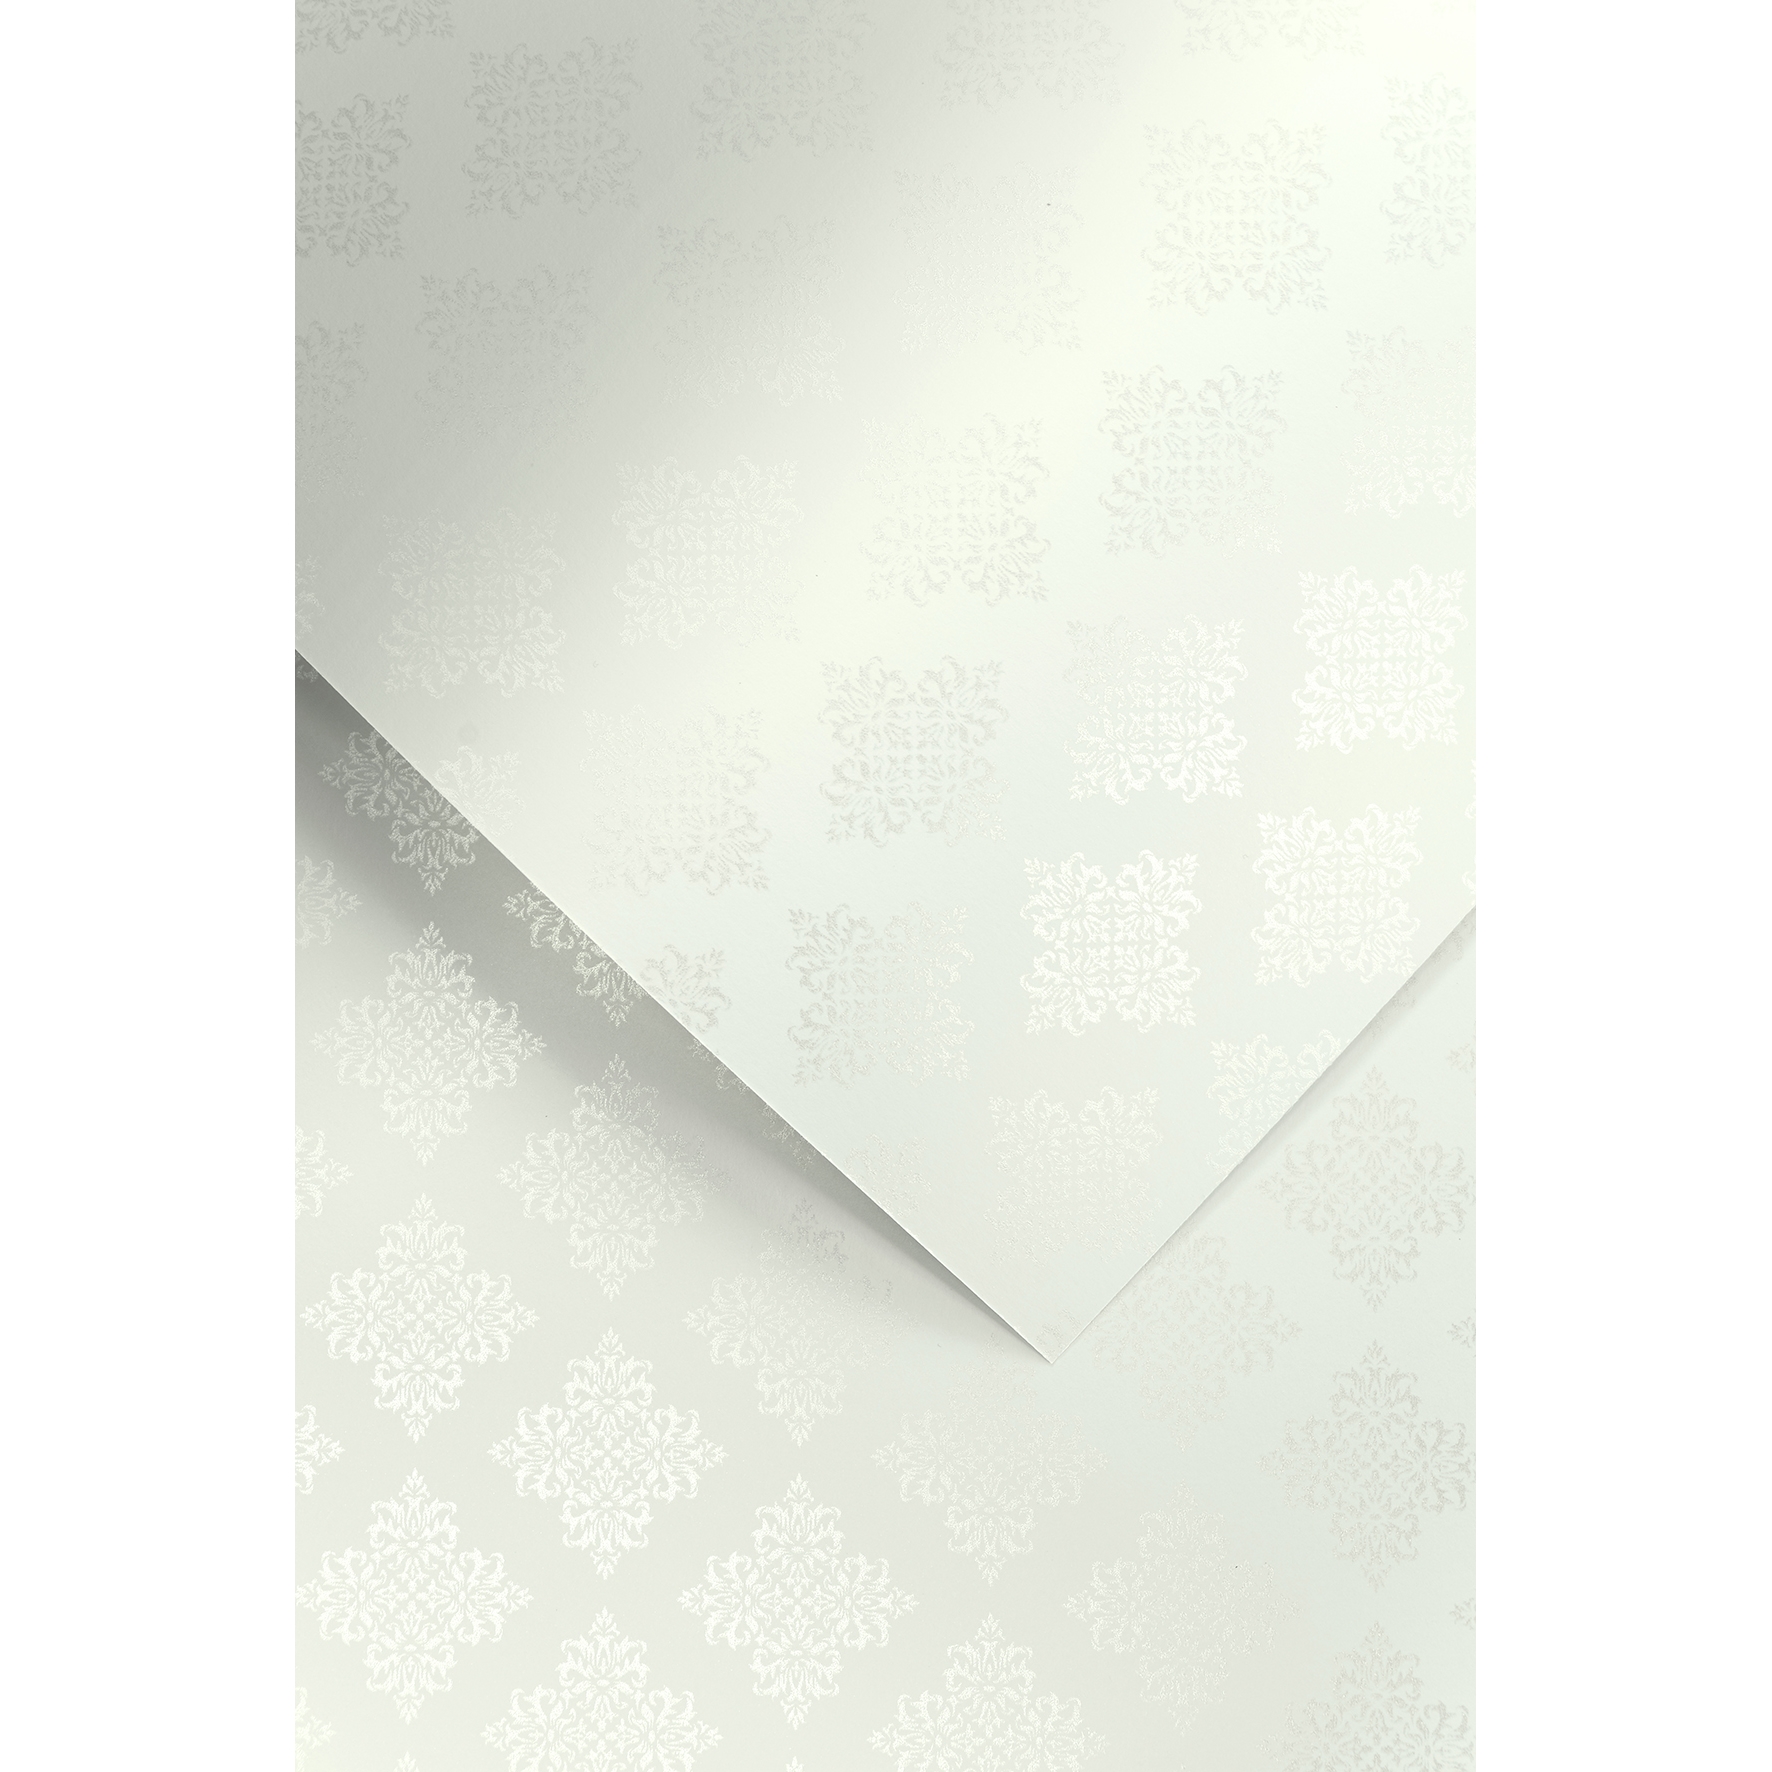 Ozdobný papír Glamour bílá 230g, 20ks